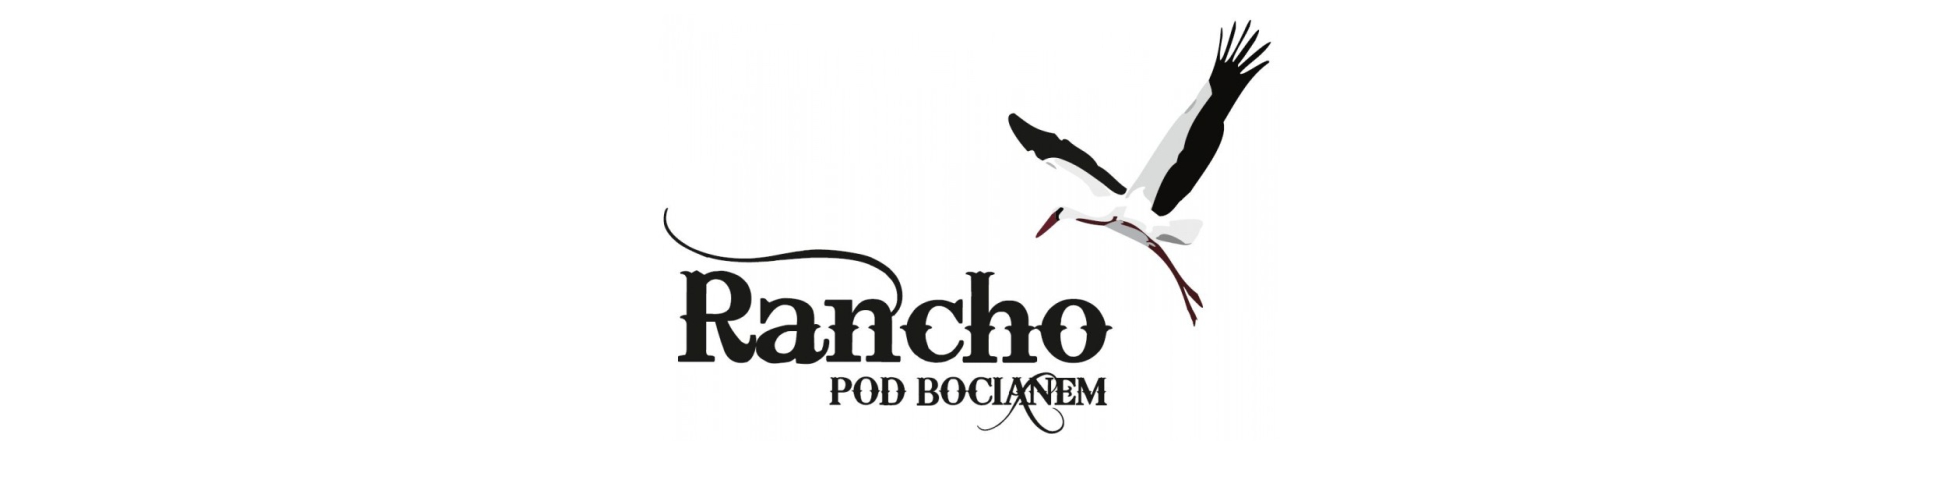 logo nowe rancho pod bocianem